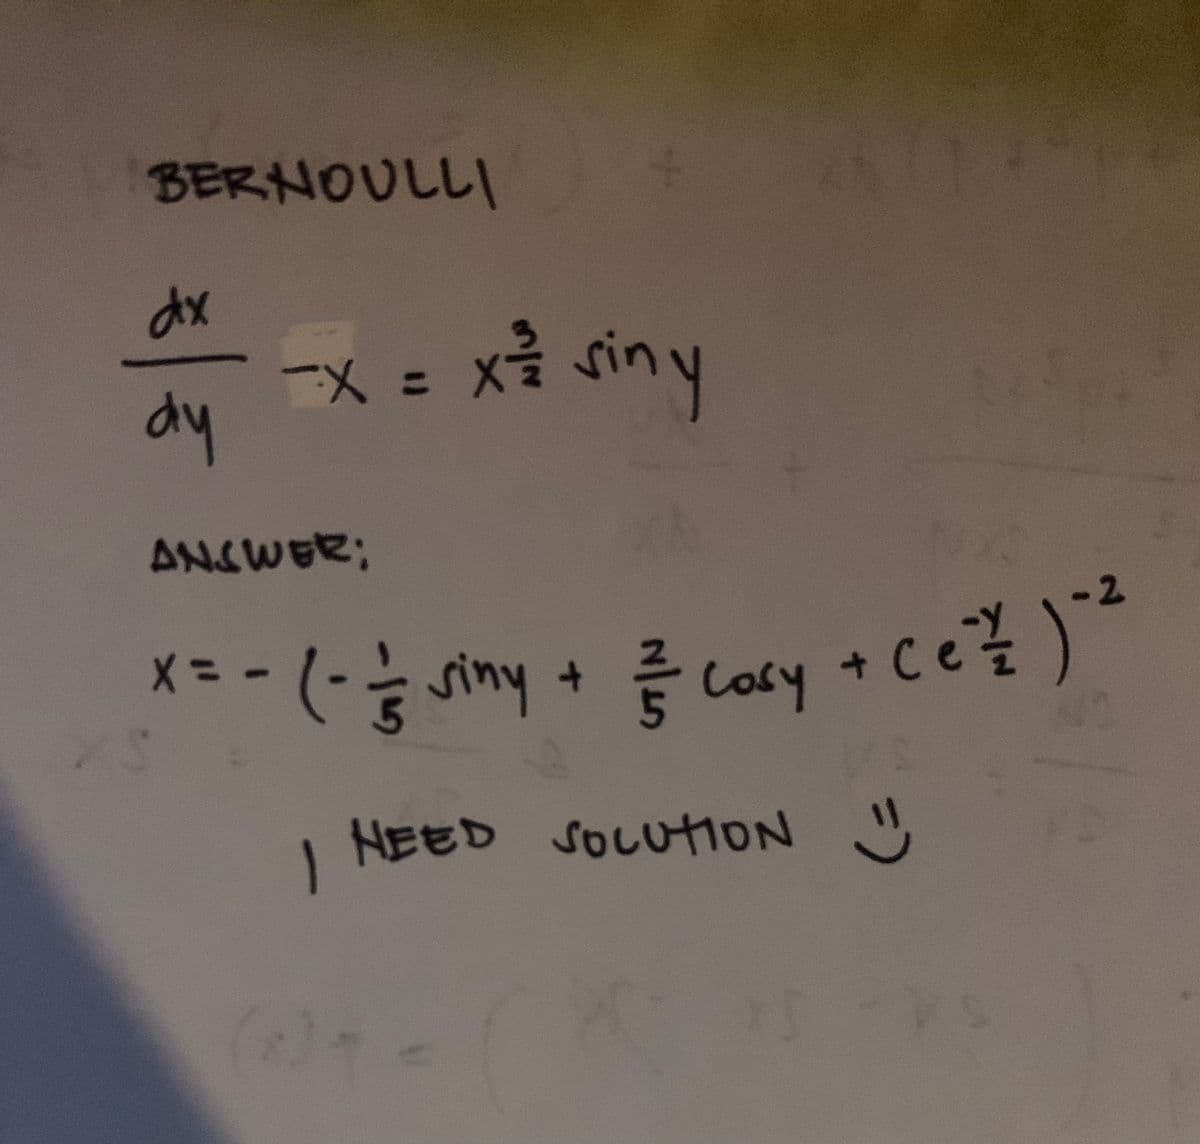 BERNOUL니I
dx
xà siny
%3D
dy
ANSWER;
+C
cosy
X= -
siny
sOLutiON
